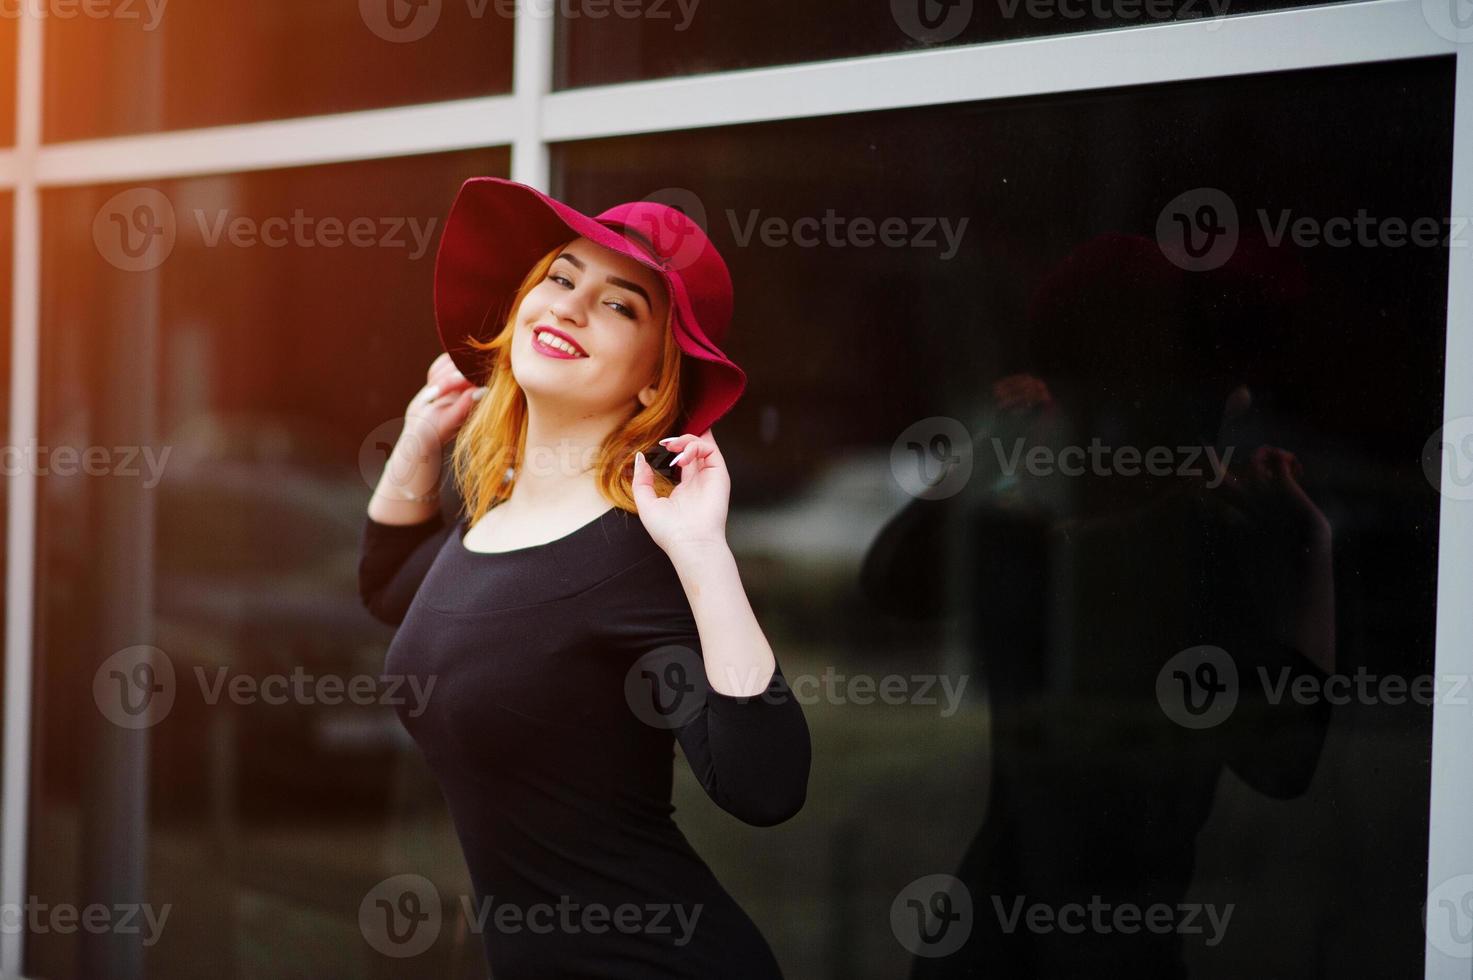 portret van mode roodharige meisje op rode hoed en zwarte jurk met lichte make-up gesteld tegen groot raam. foto getinte stijl instagram filters.